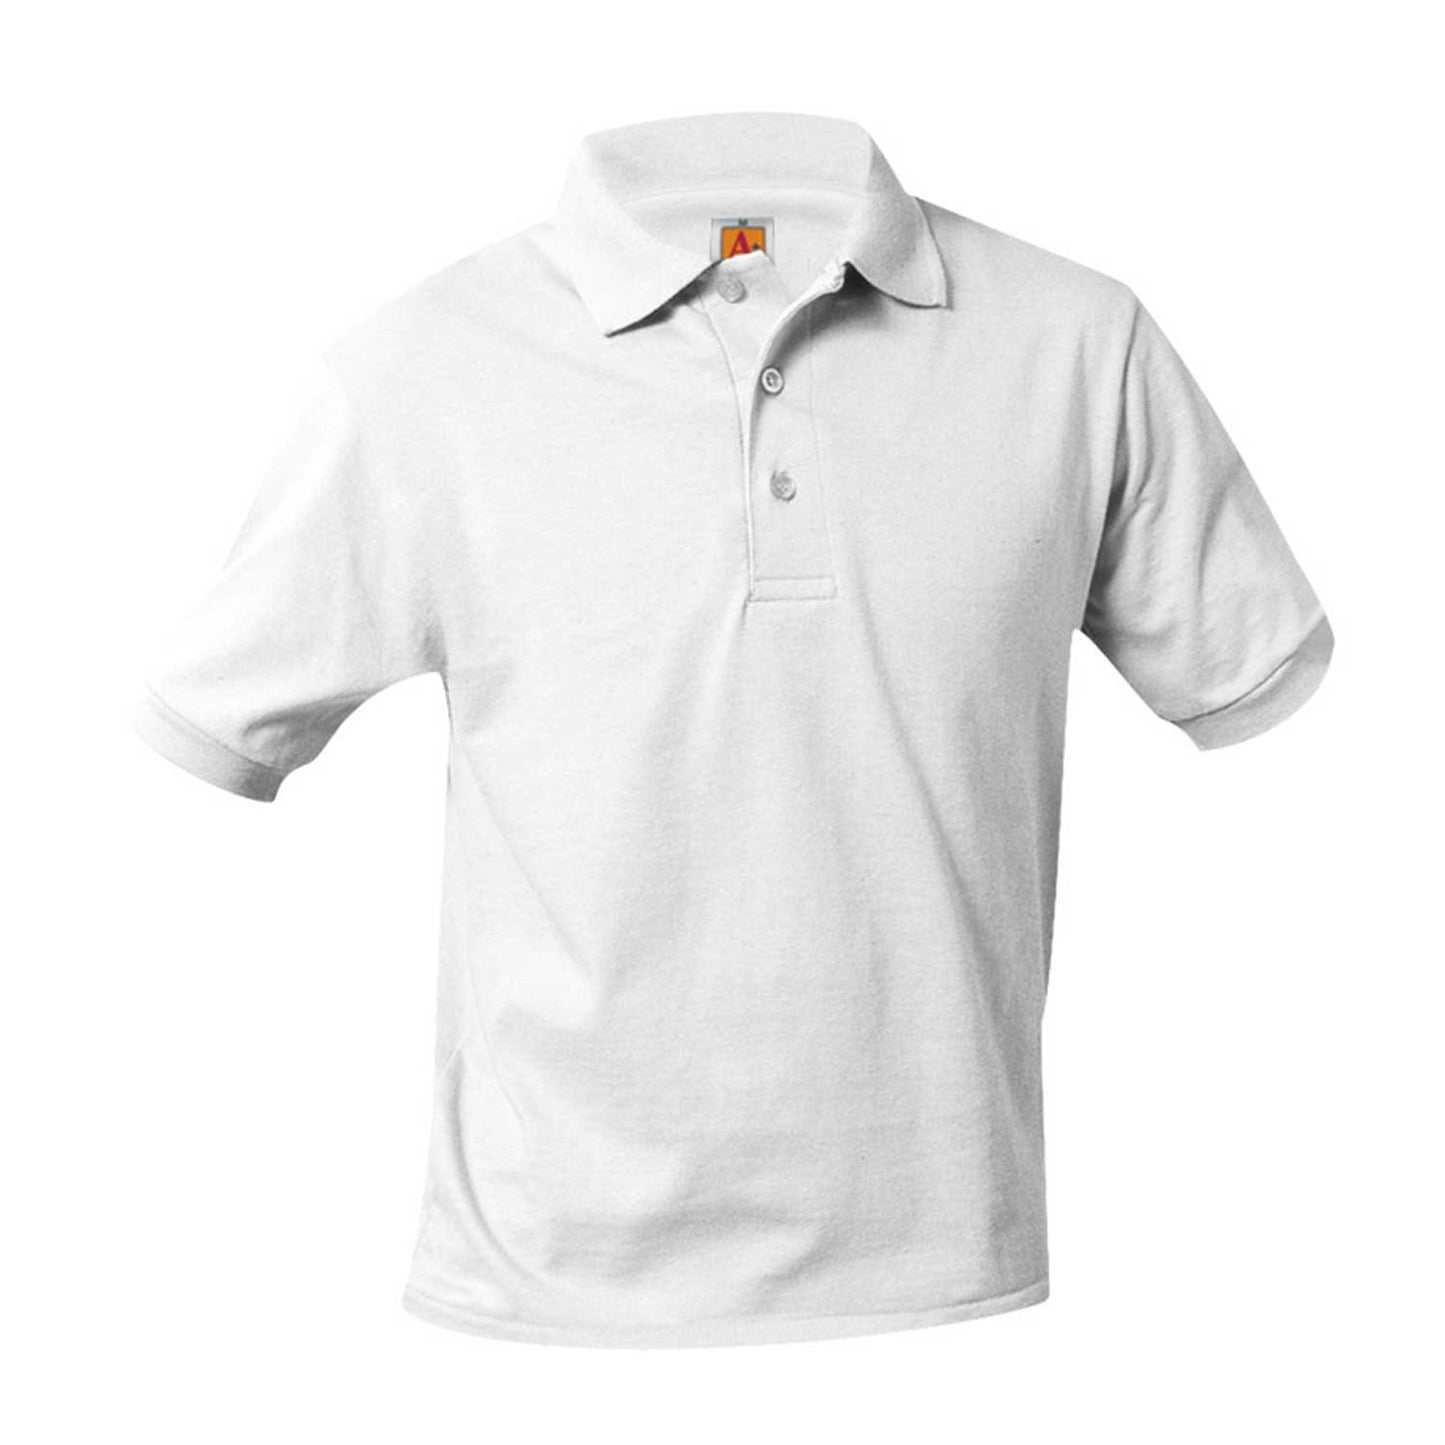 Unisex Jersey Knit Polo Shirt, Short Sleeves w/Logo - 1100